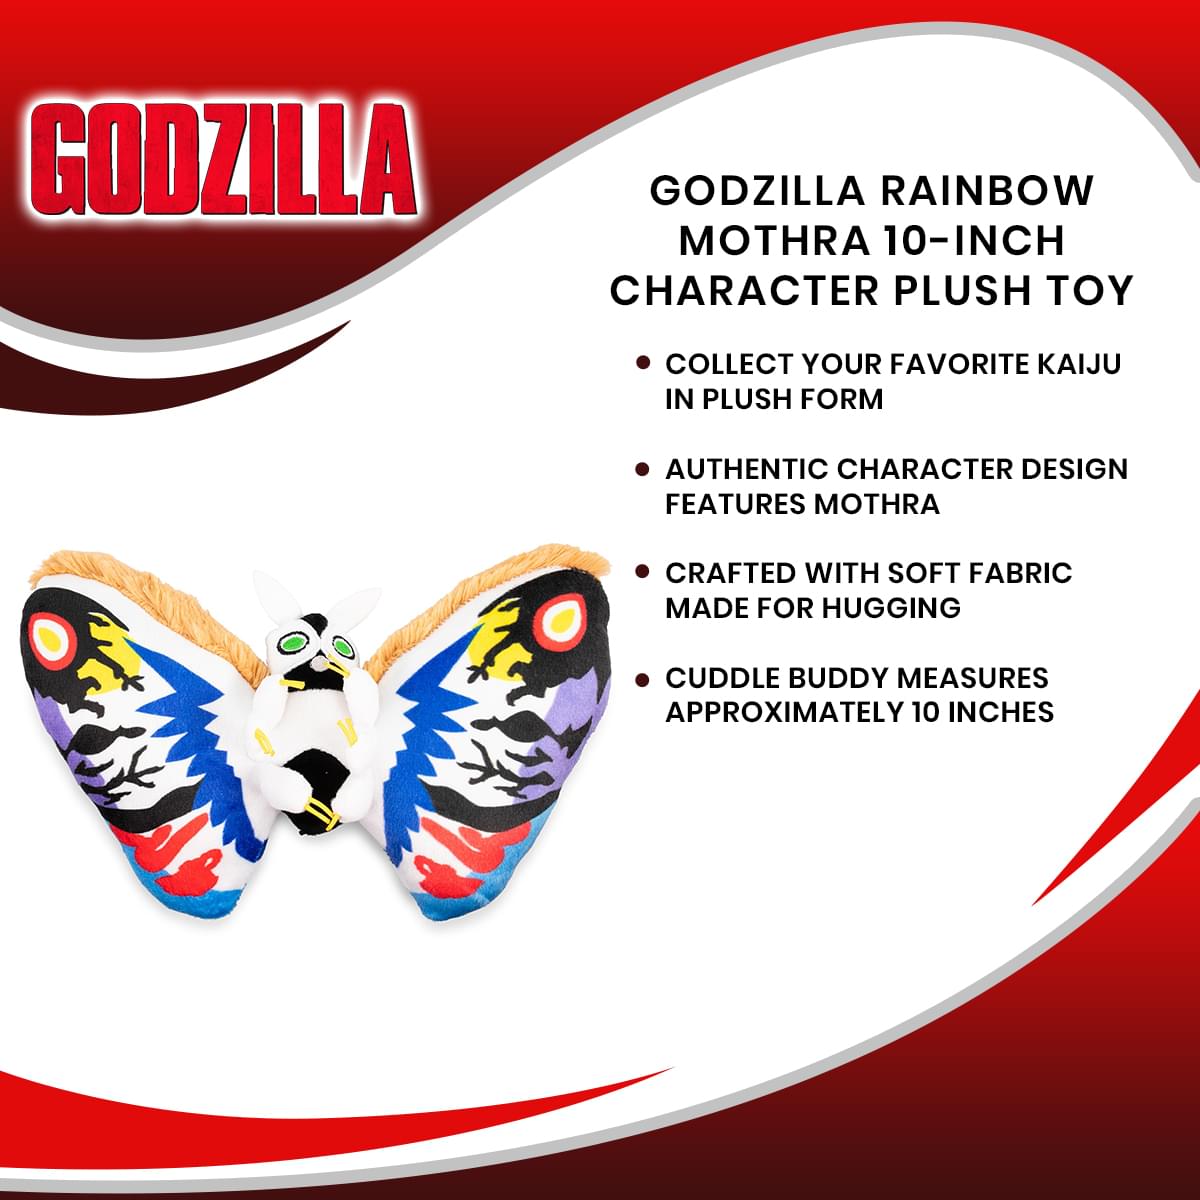 Godzilla Rainbow Mothra 10-Inch Character Plush Toy